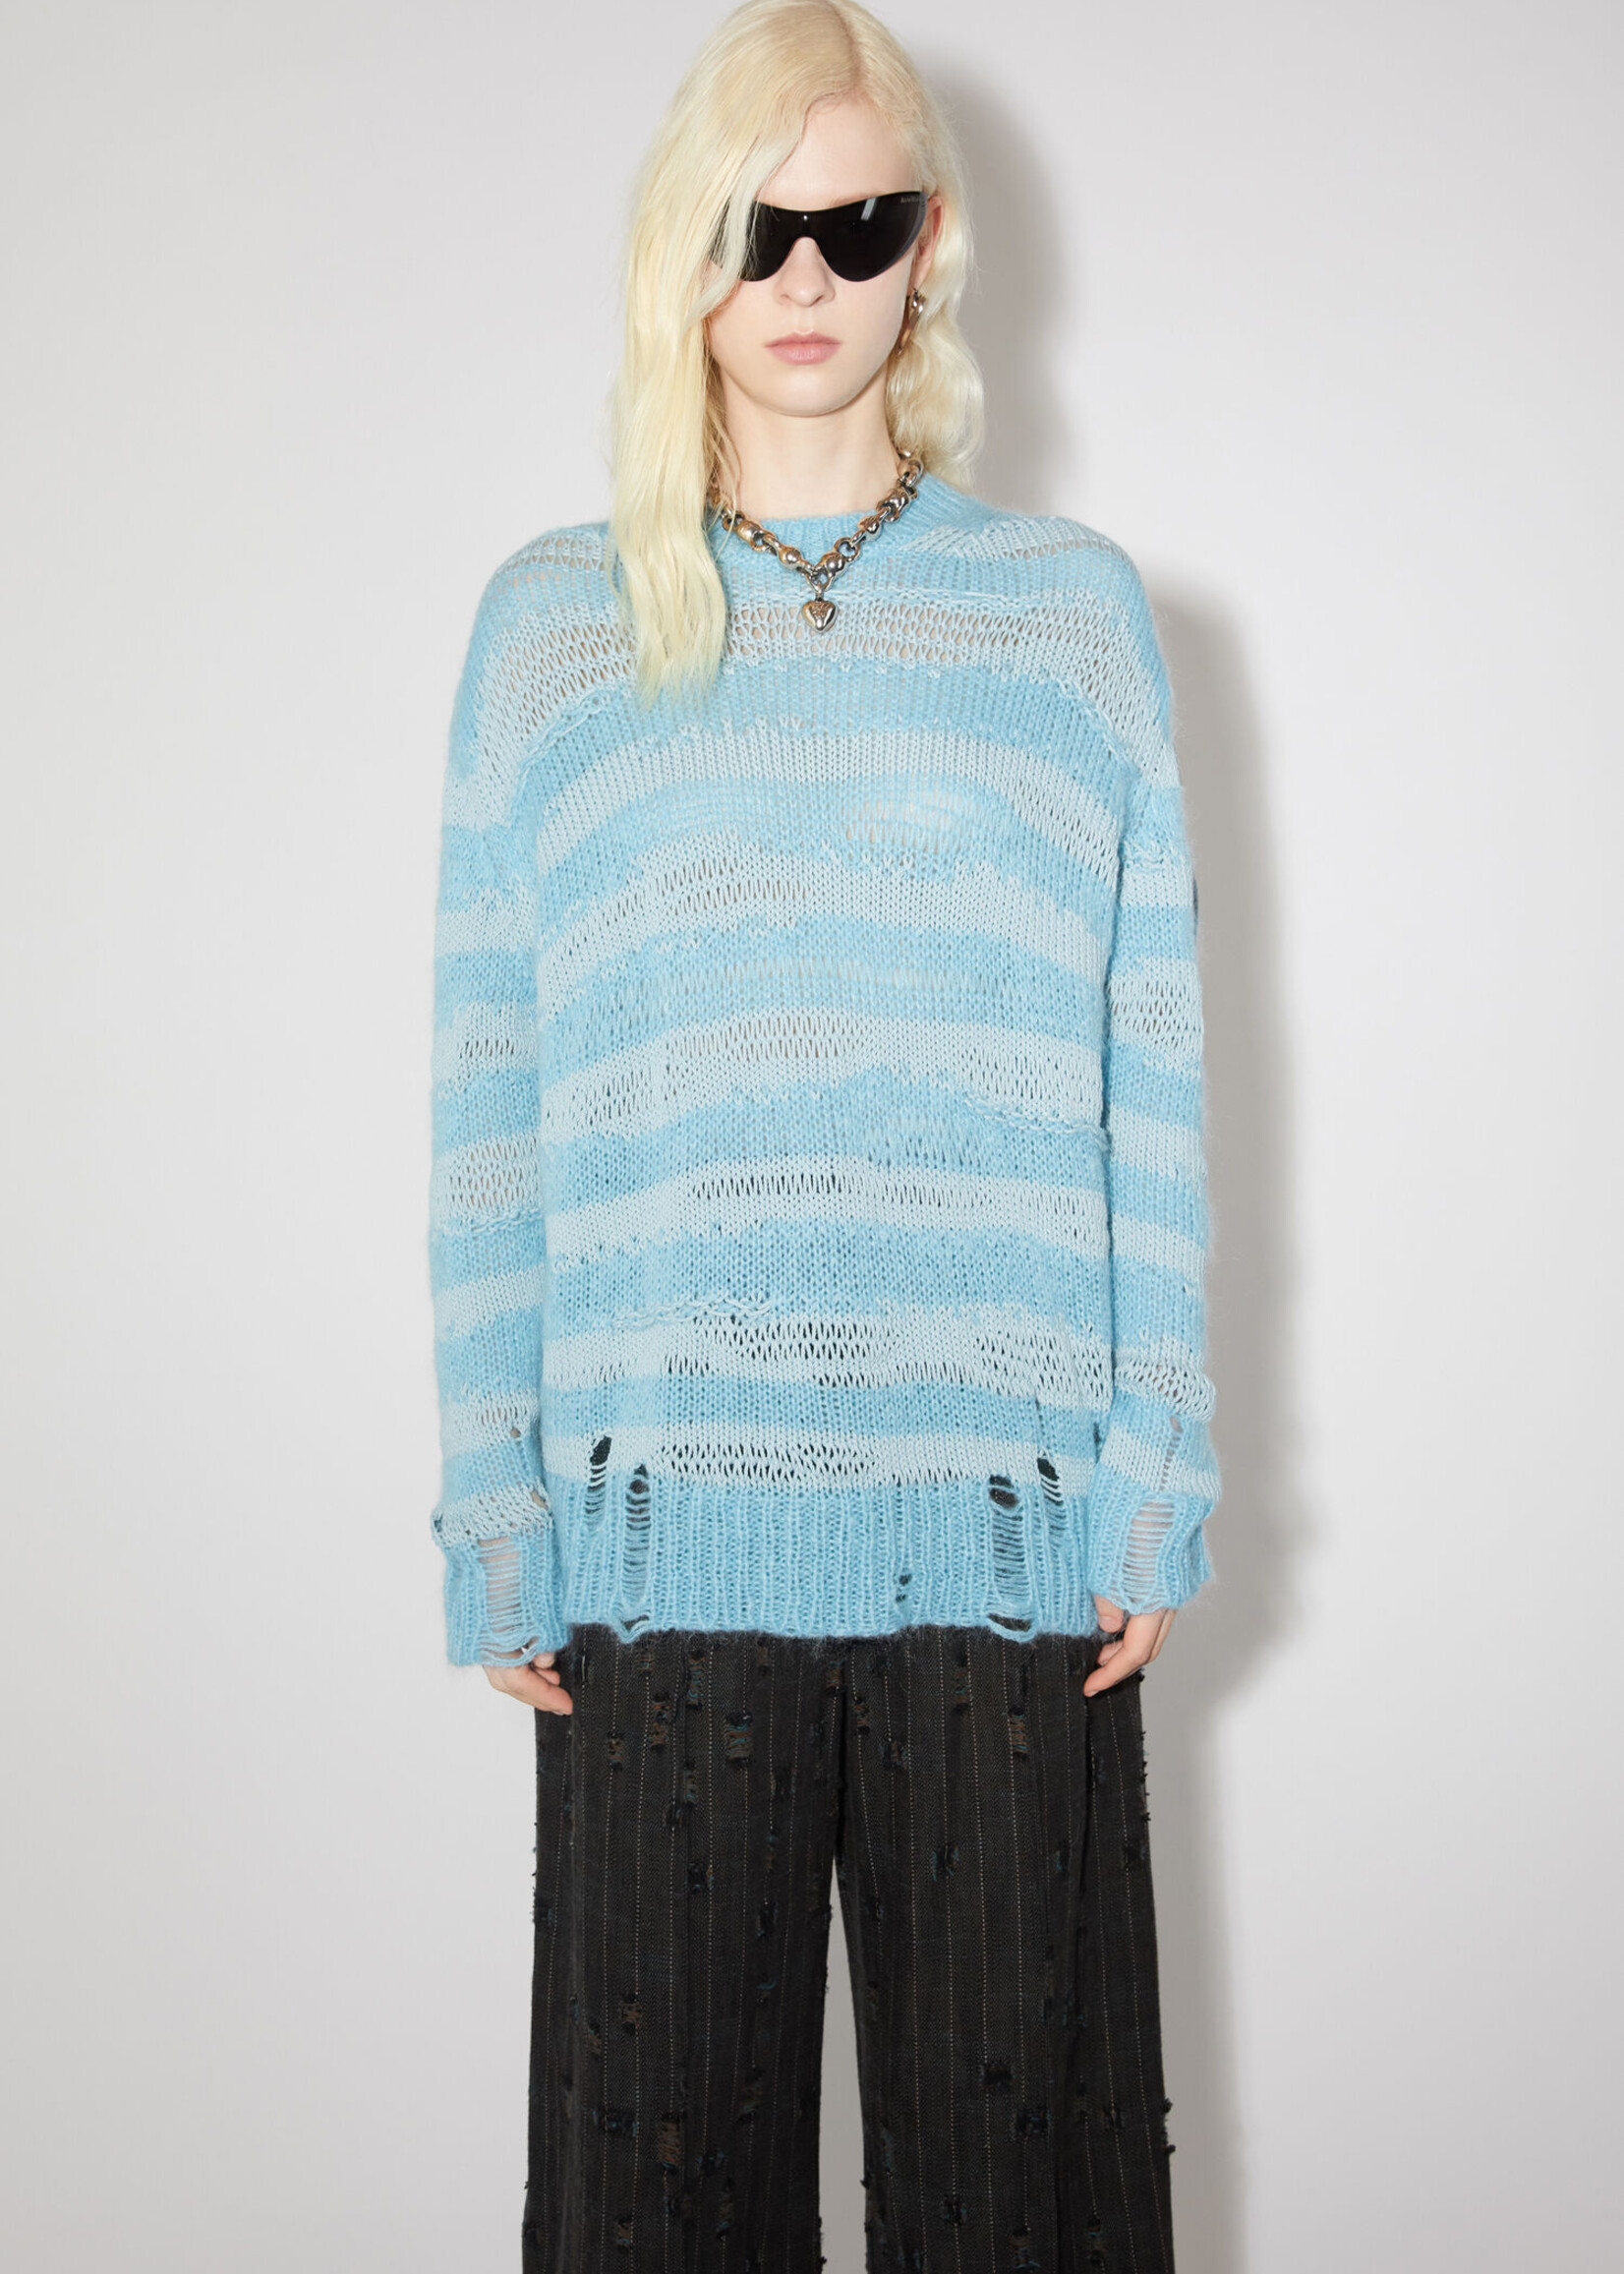 Acne Studios Distressed knit jumper - Sky blue/powder blue